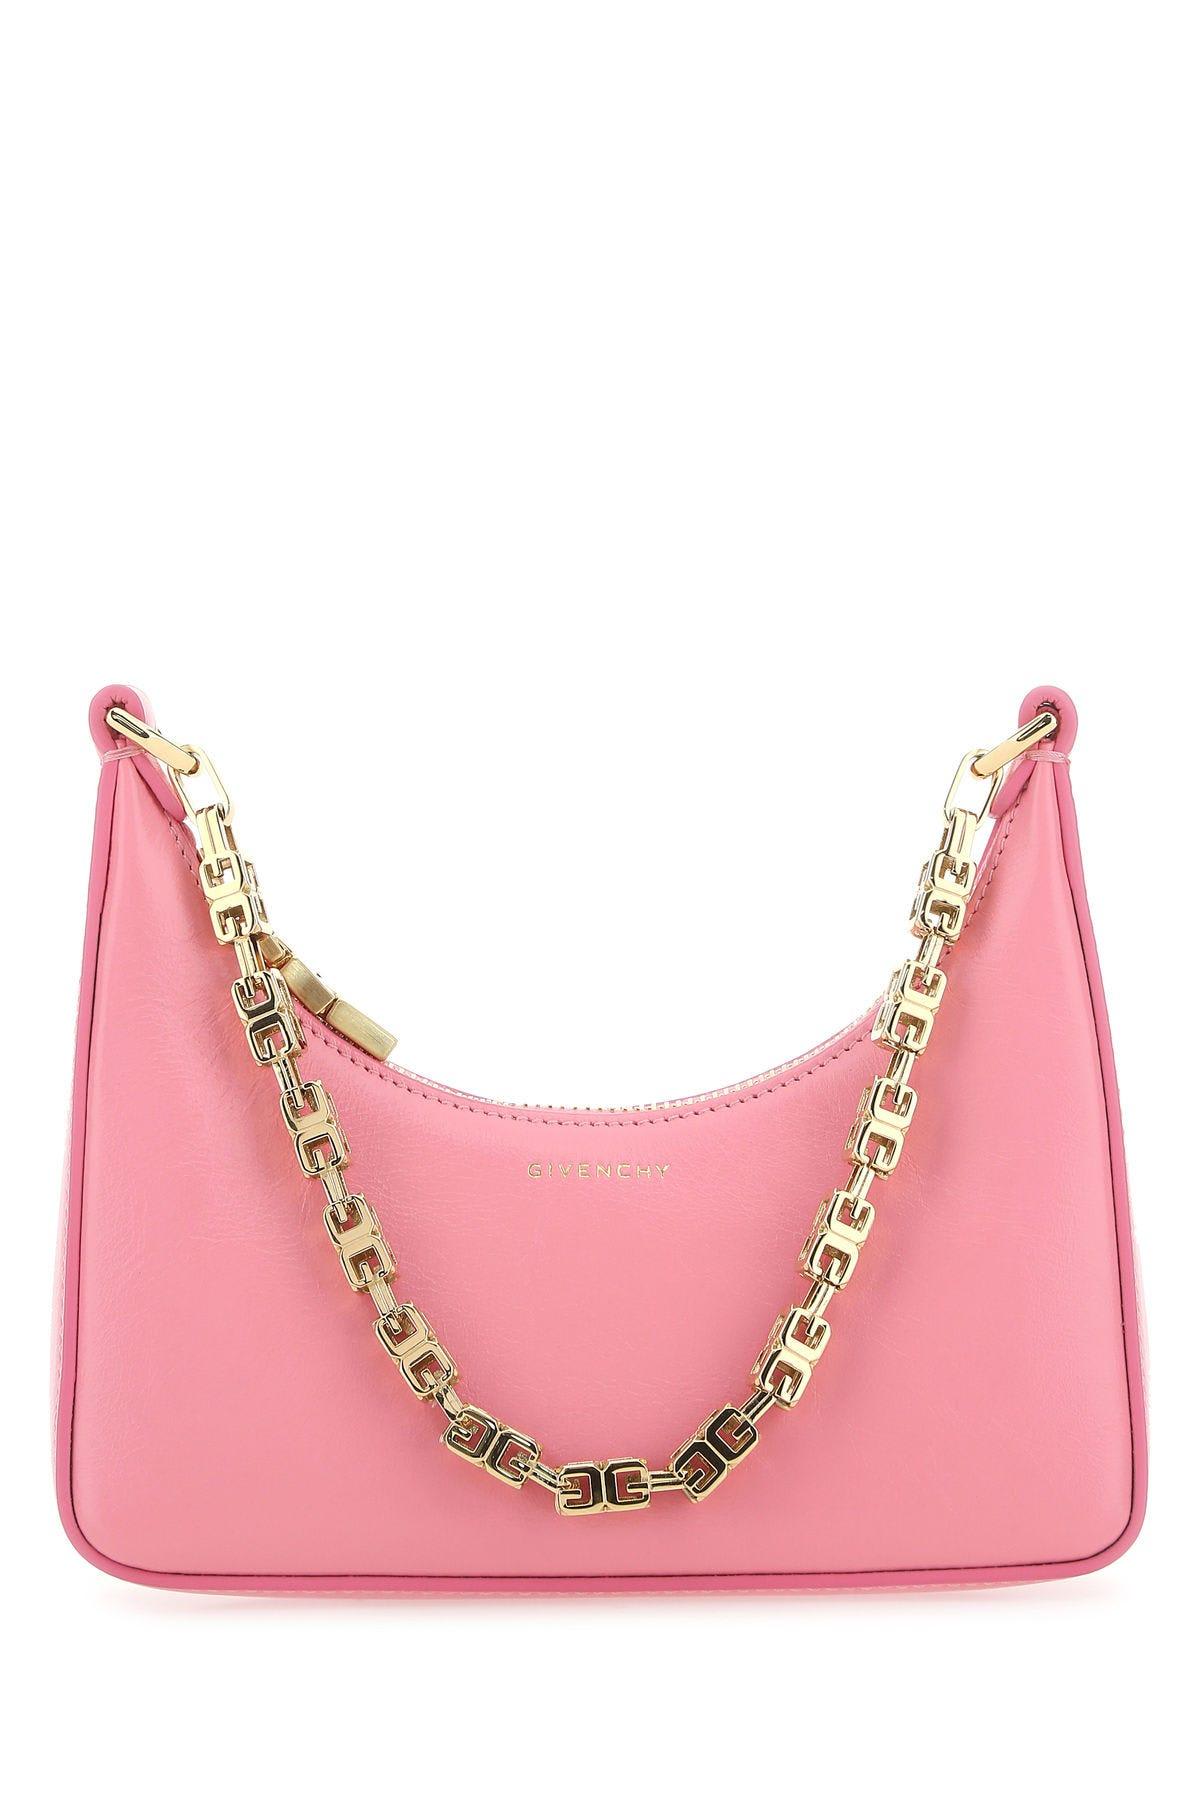 Givenchy Pink Leather Mini Moon Cut Handbag